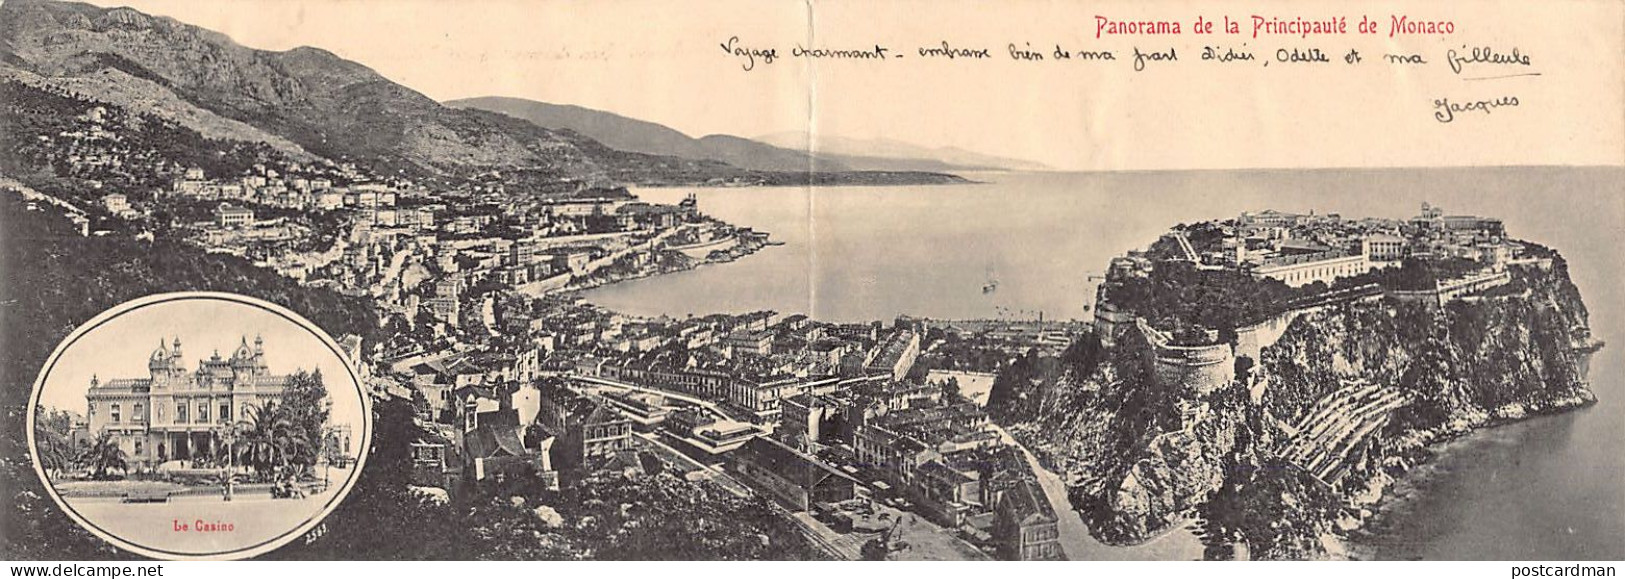 Panorama De La Principauté De Monaco - Le Casino - CARTE DOUBLE PANORAMIQUE - Mehransichten, Panoramakarten